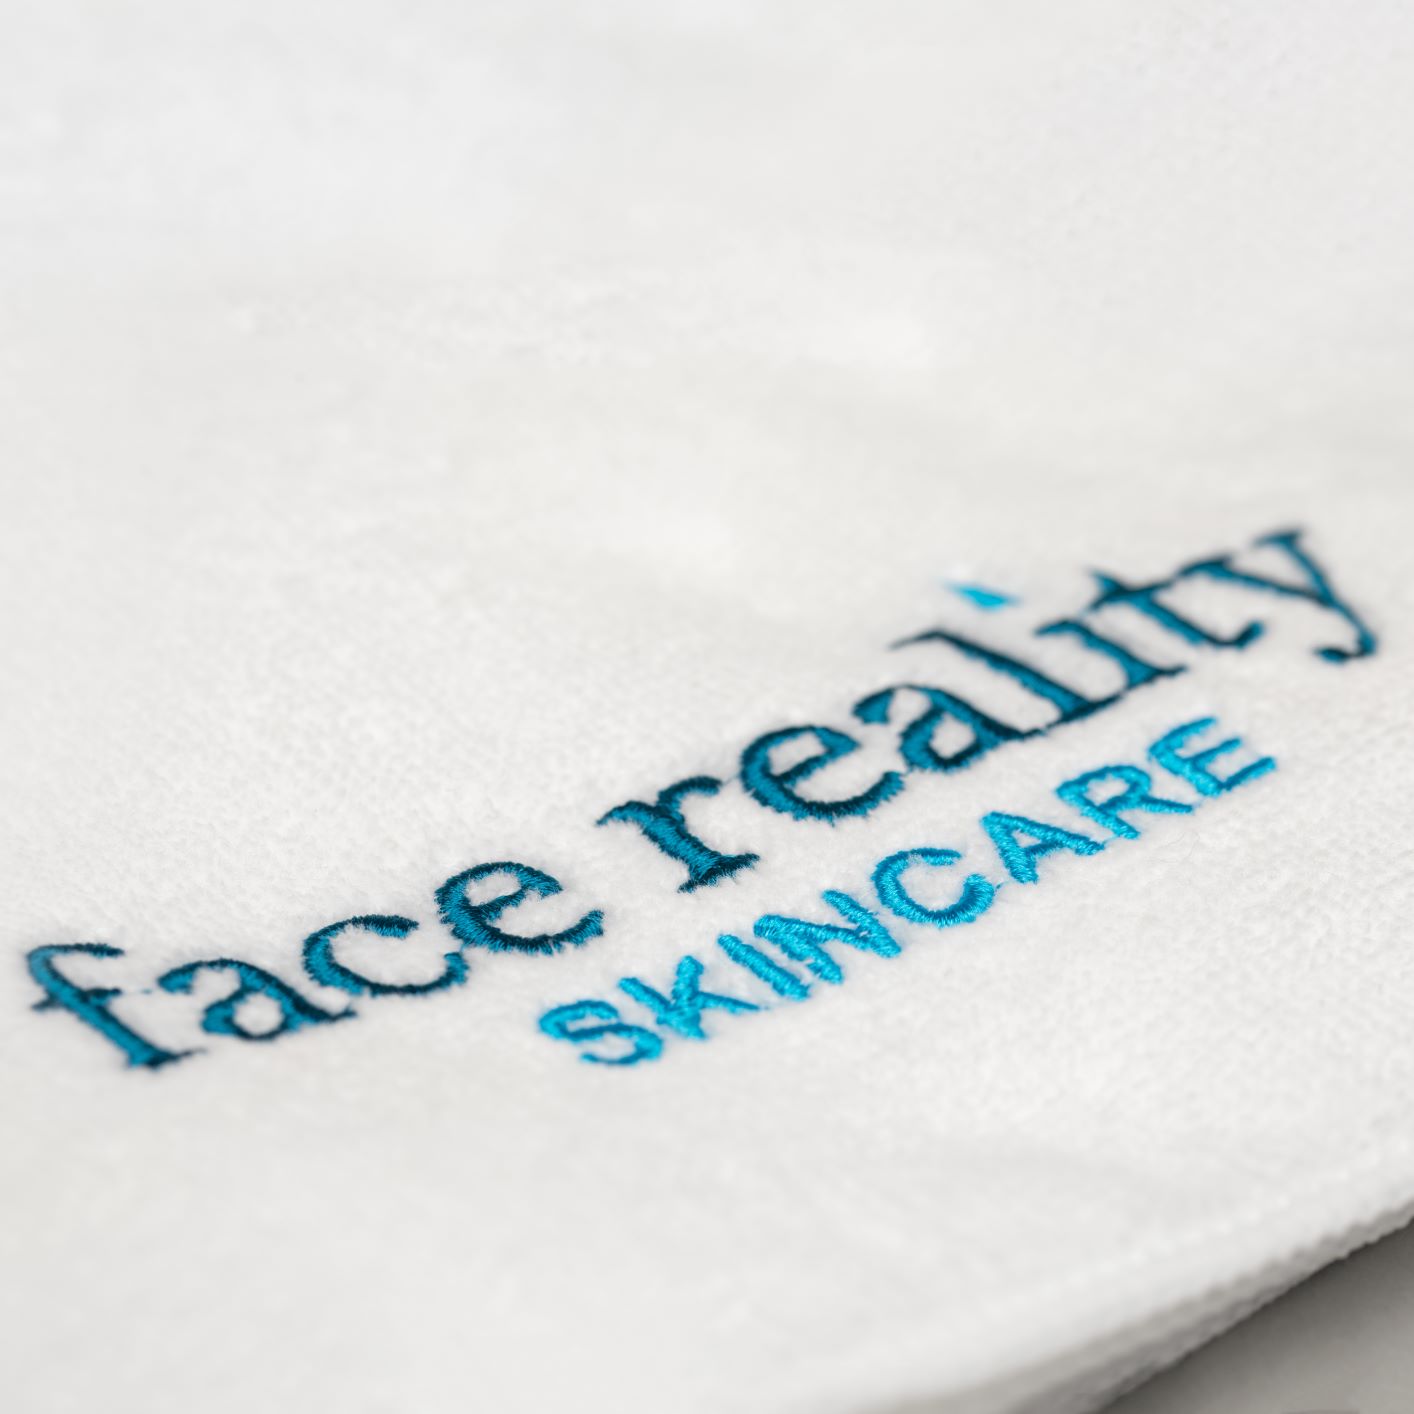 Face Reality Skincare logo on towel